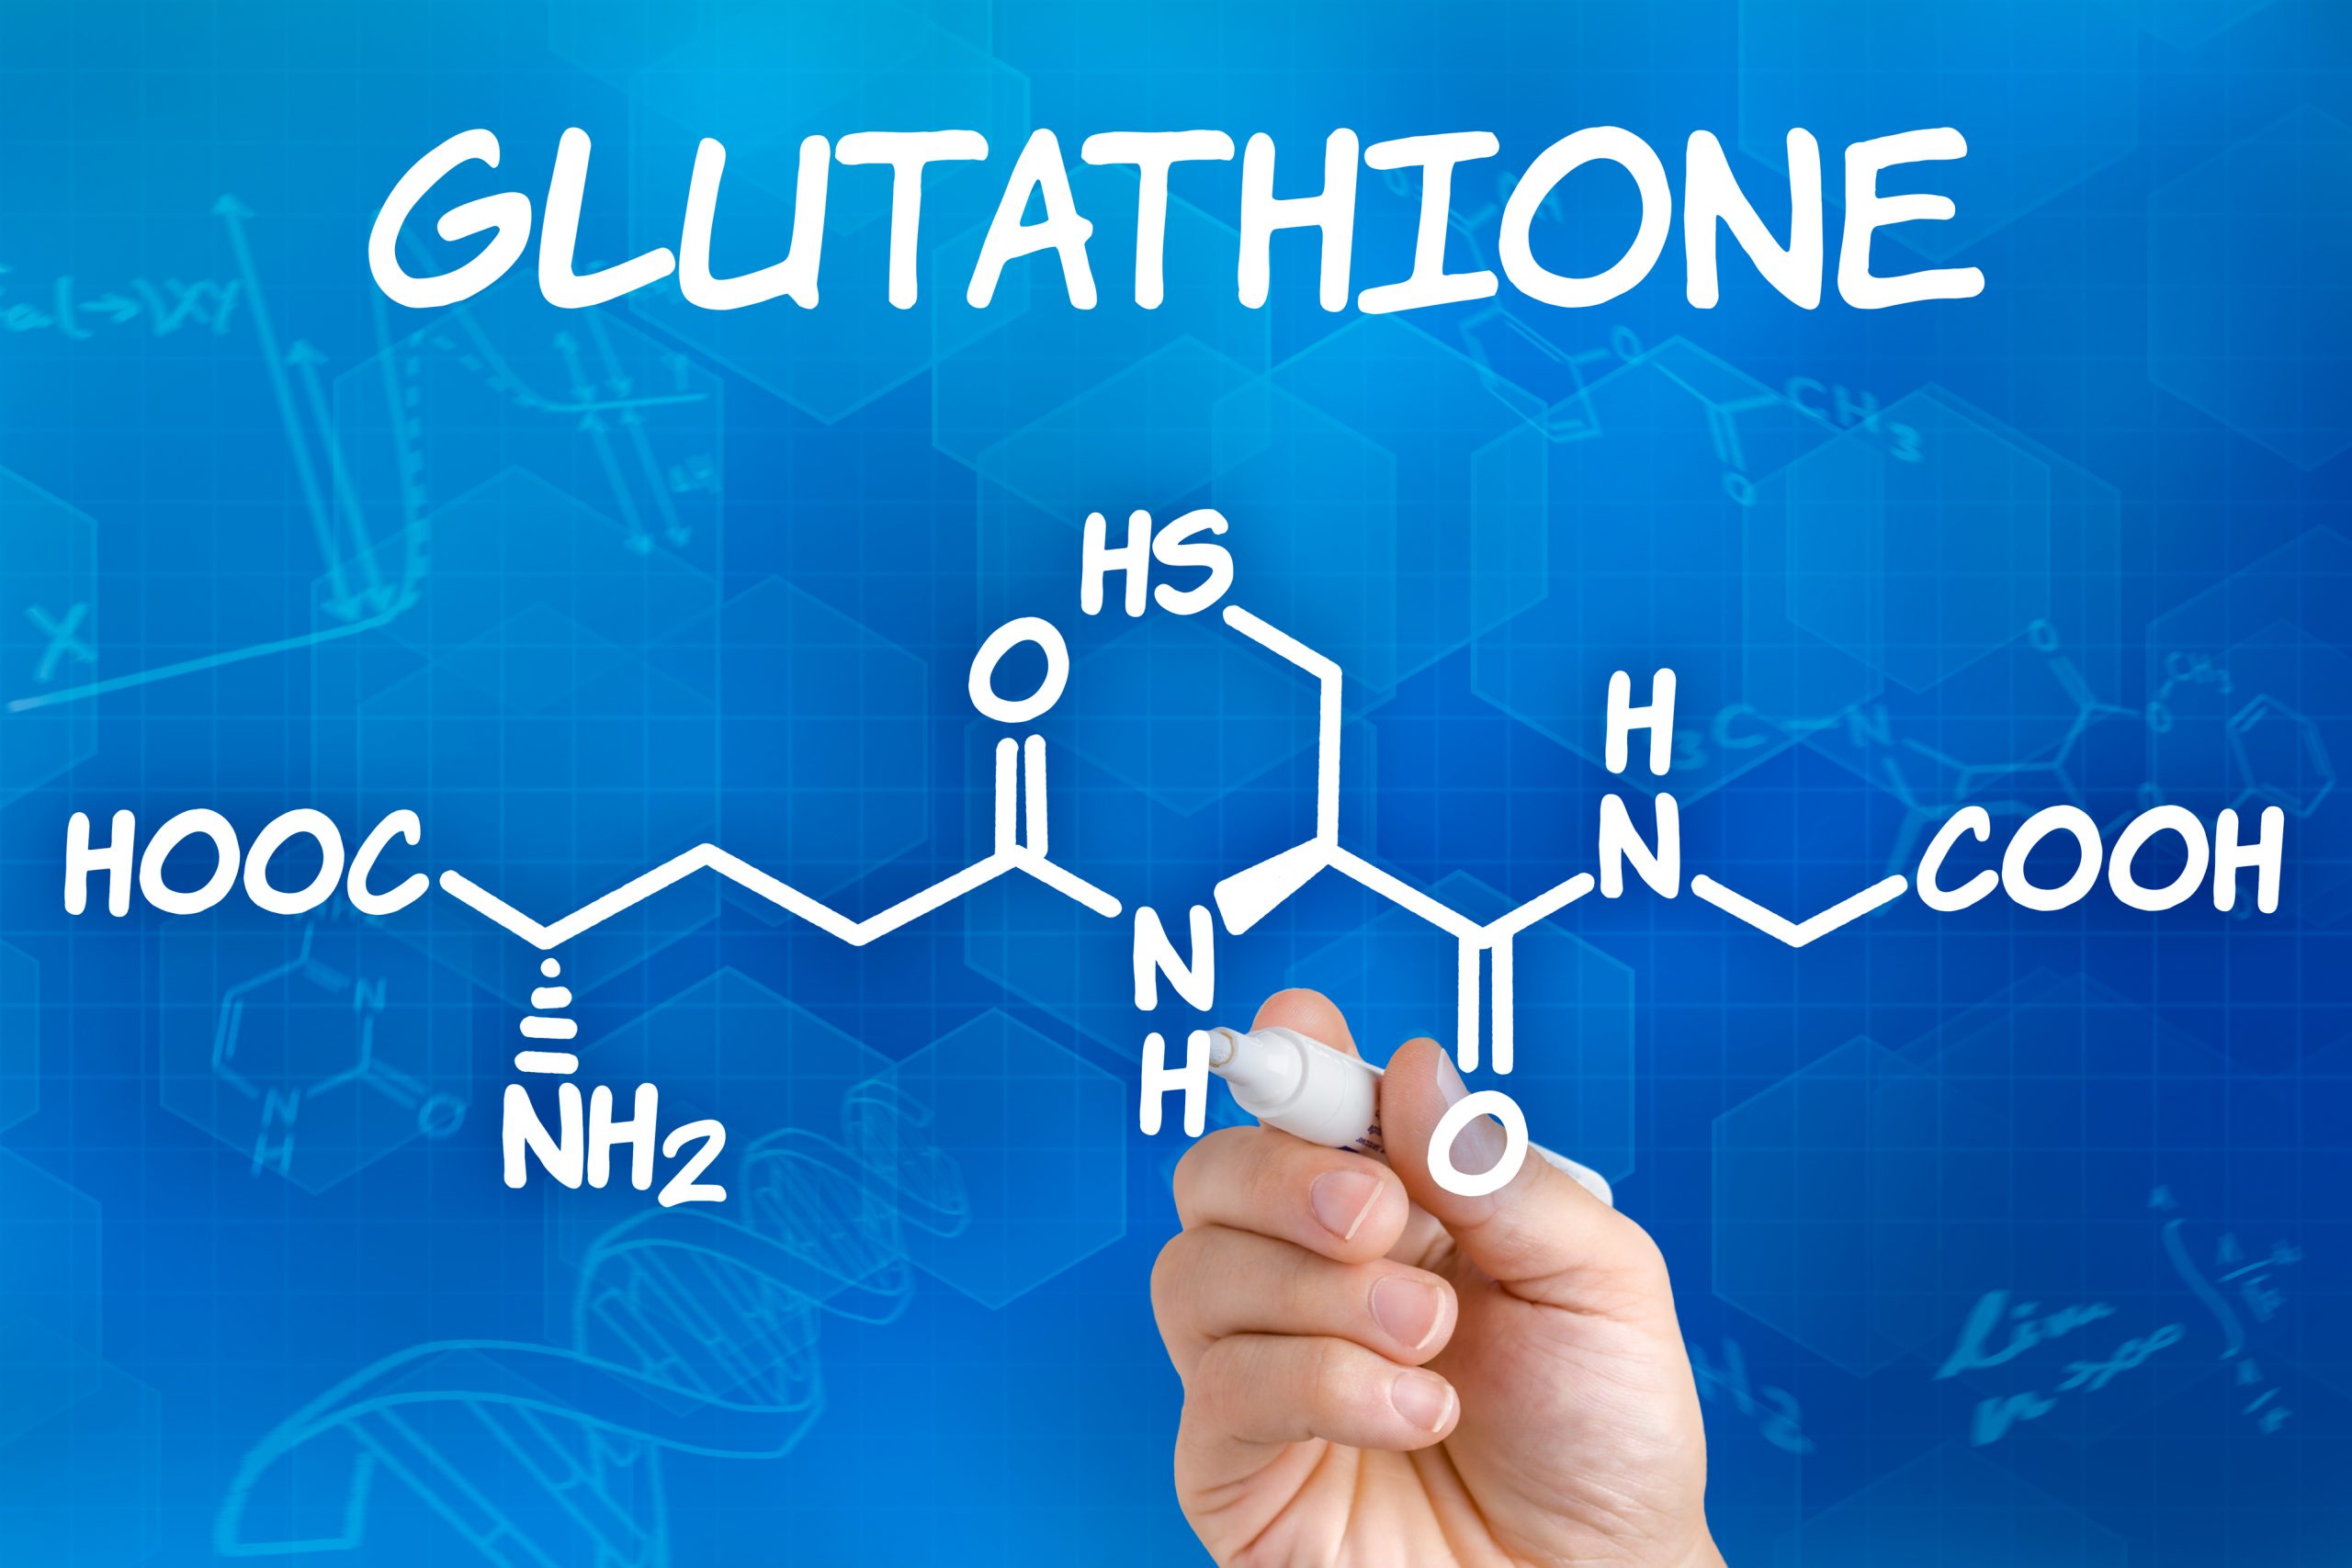 glutathione benefits molecule introducing the benefits of glutathione